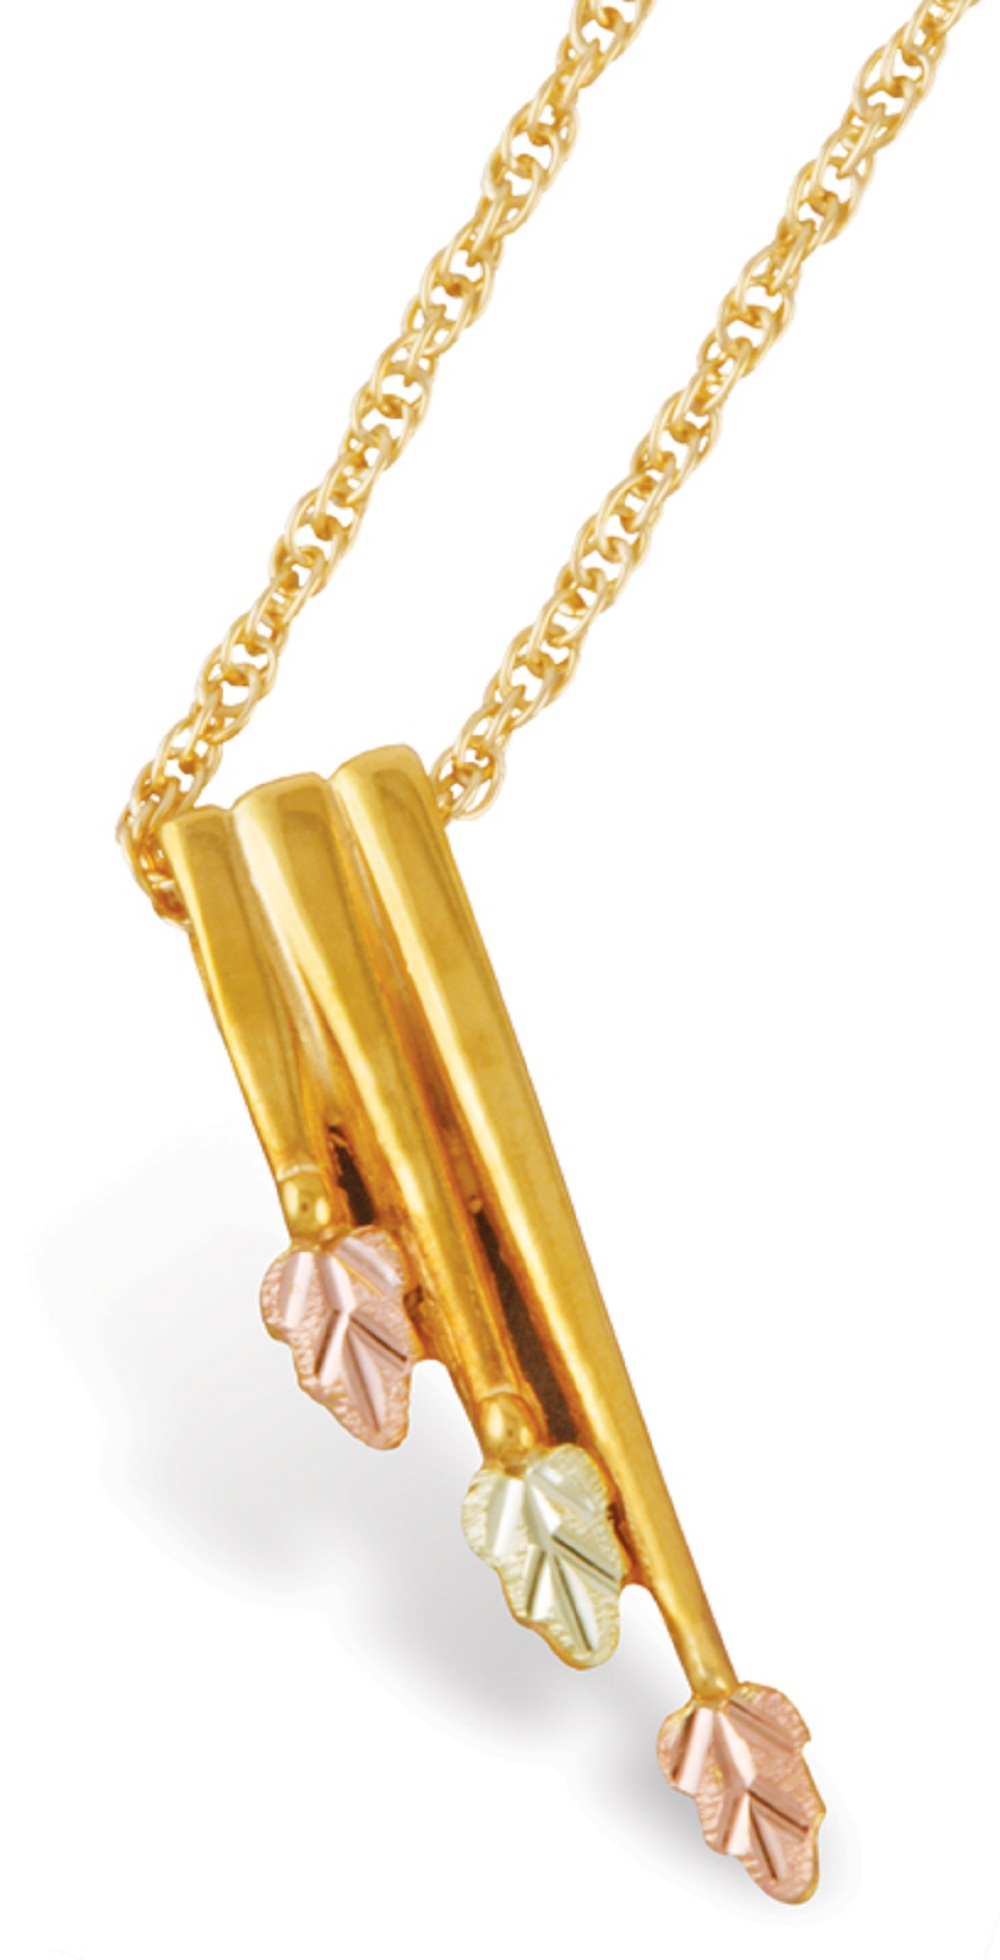 Black Hills Gold Necklace with Grape LeaF Pendant. 